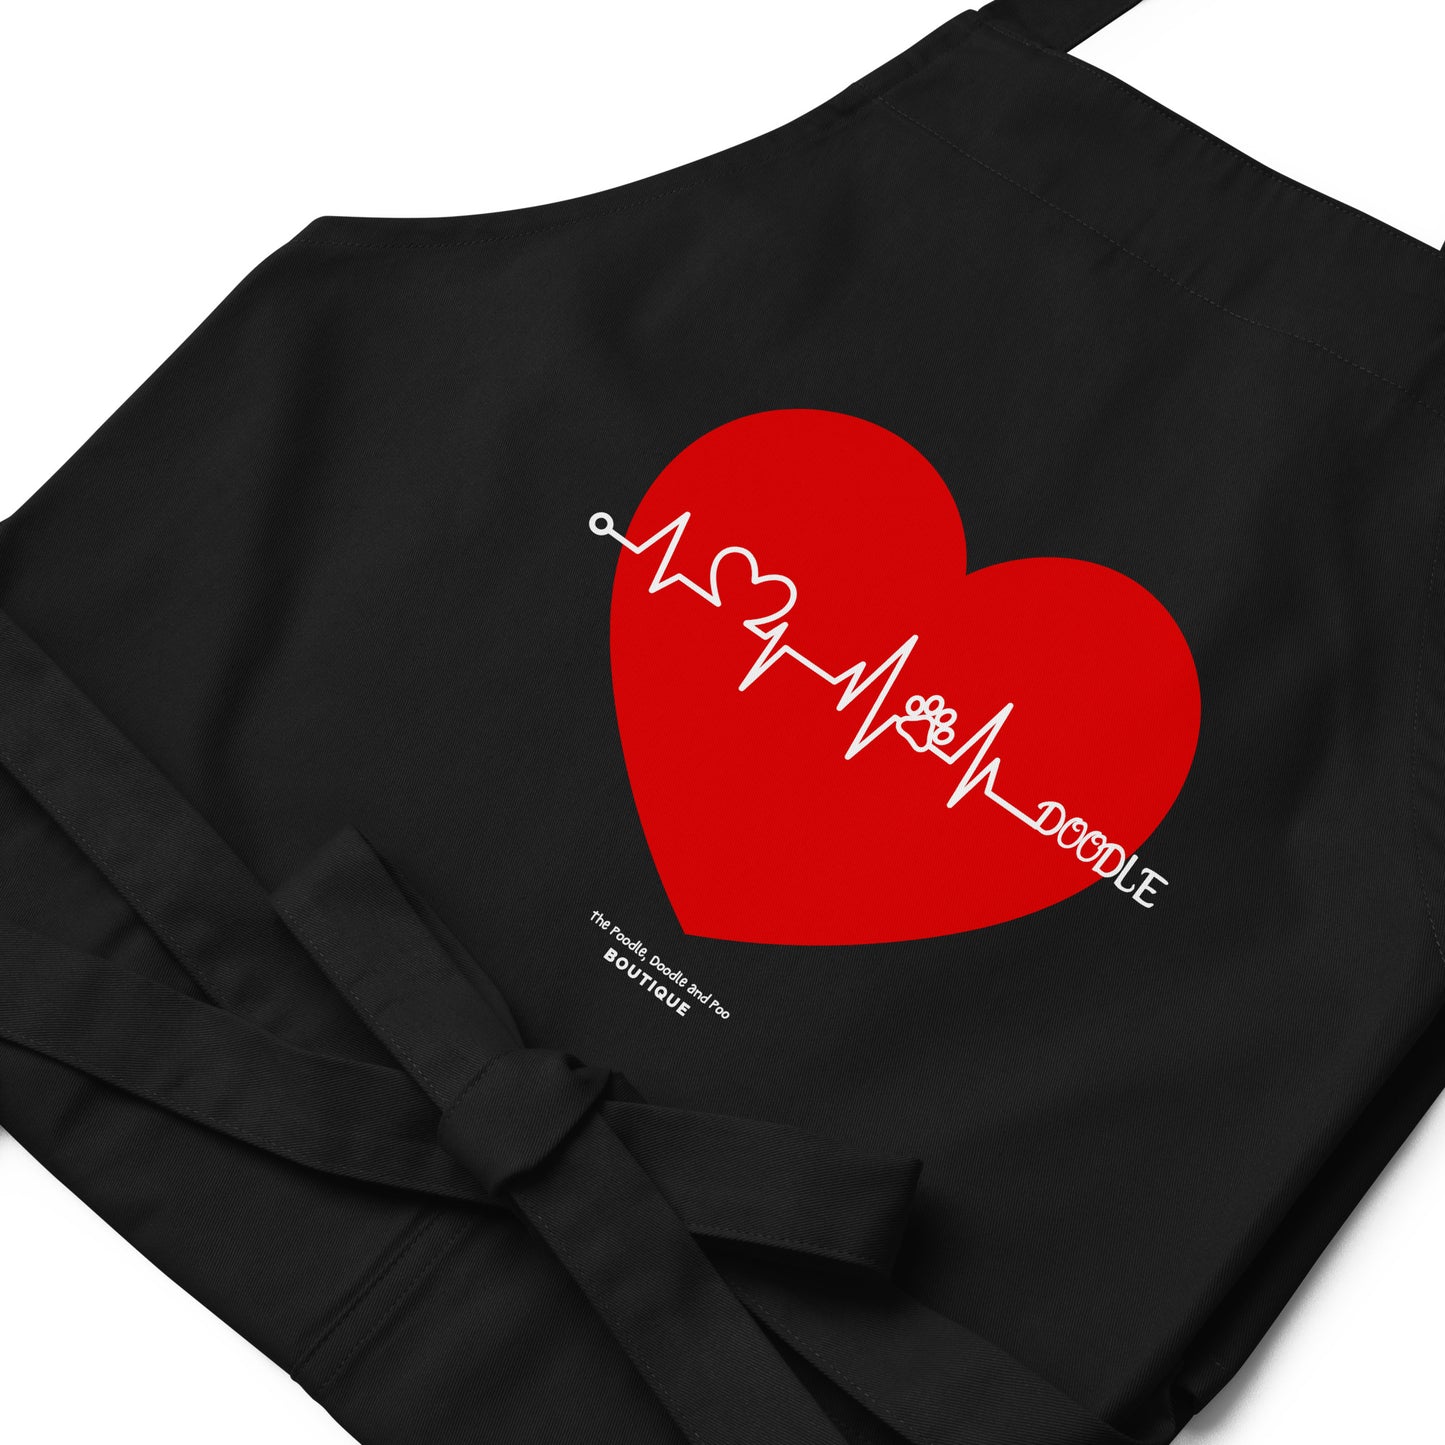 "Heartbeat Doodle" Organic cotton apron